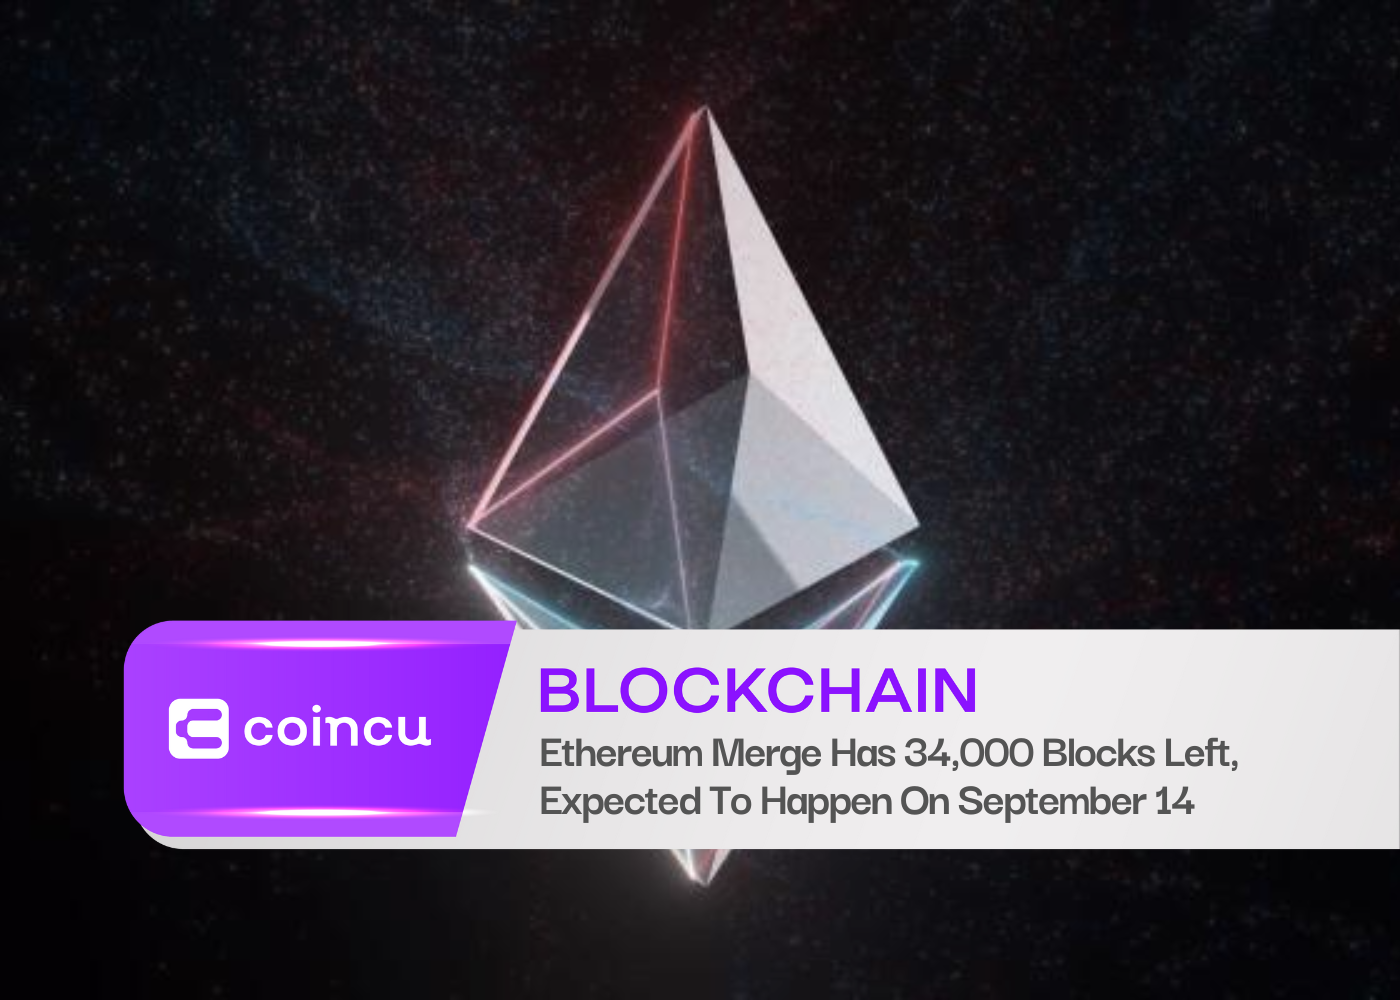 Ethereum Merge Has 34,000 Blocks Left, Expected To Happen On September 14